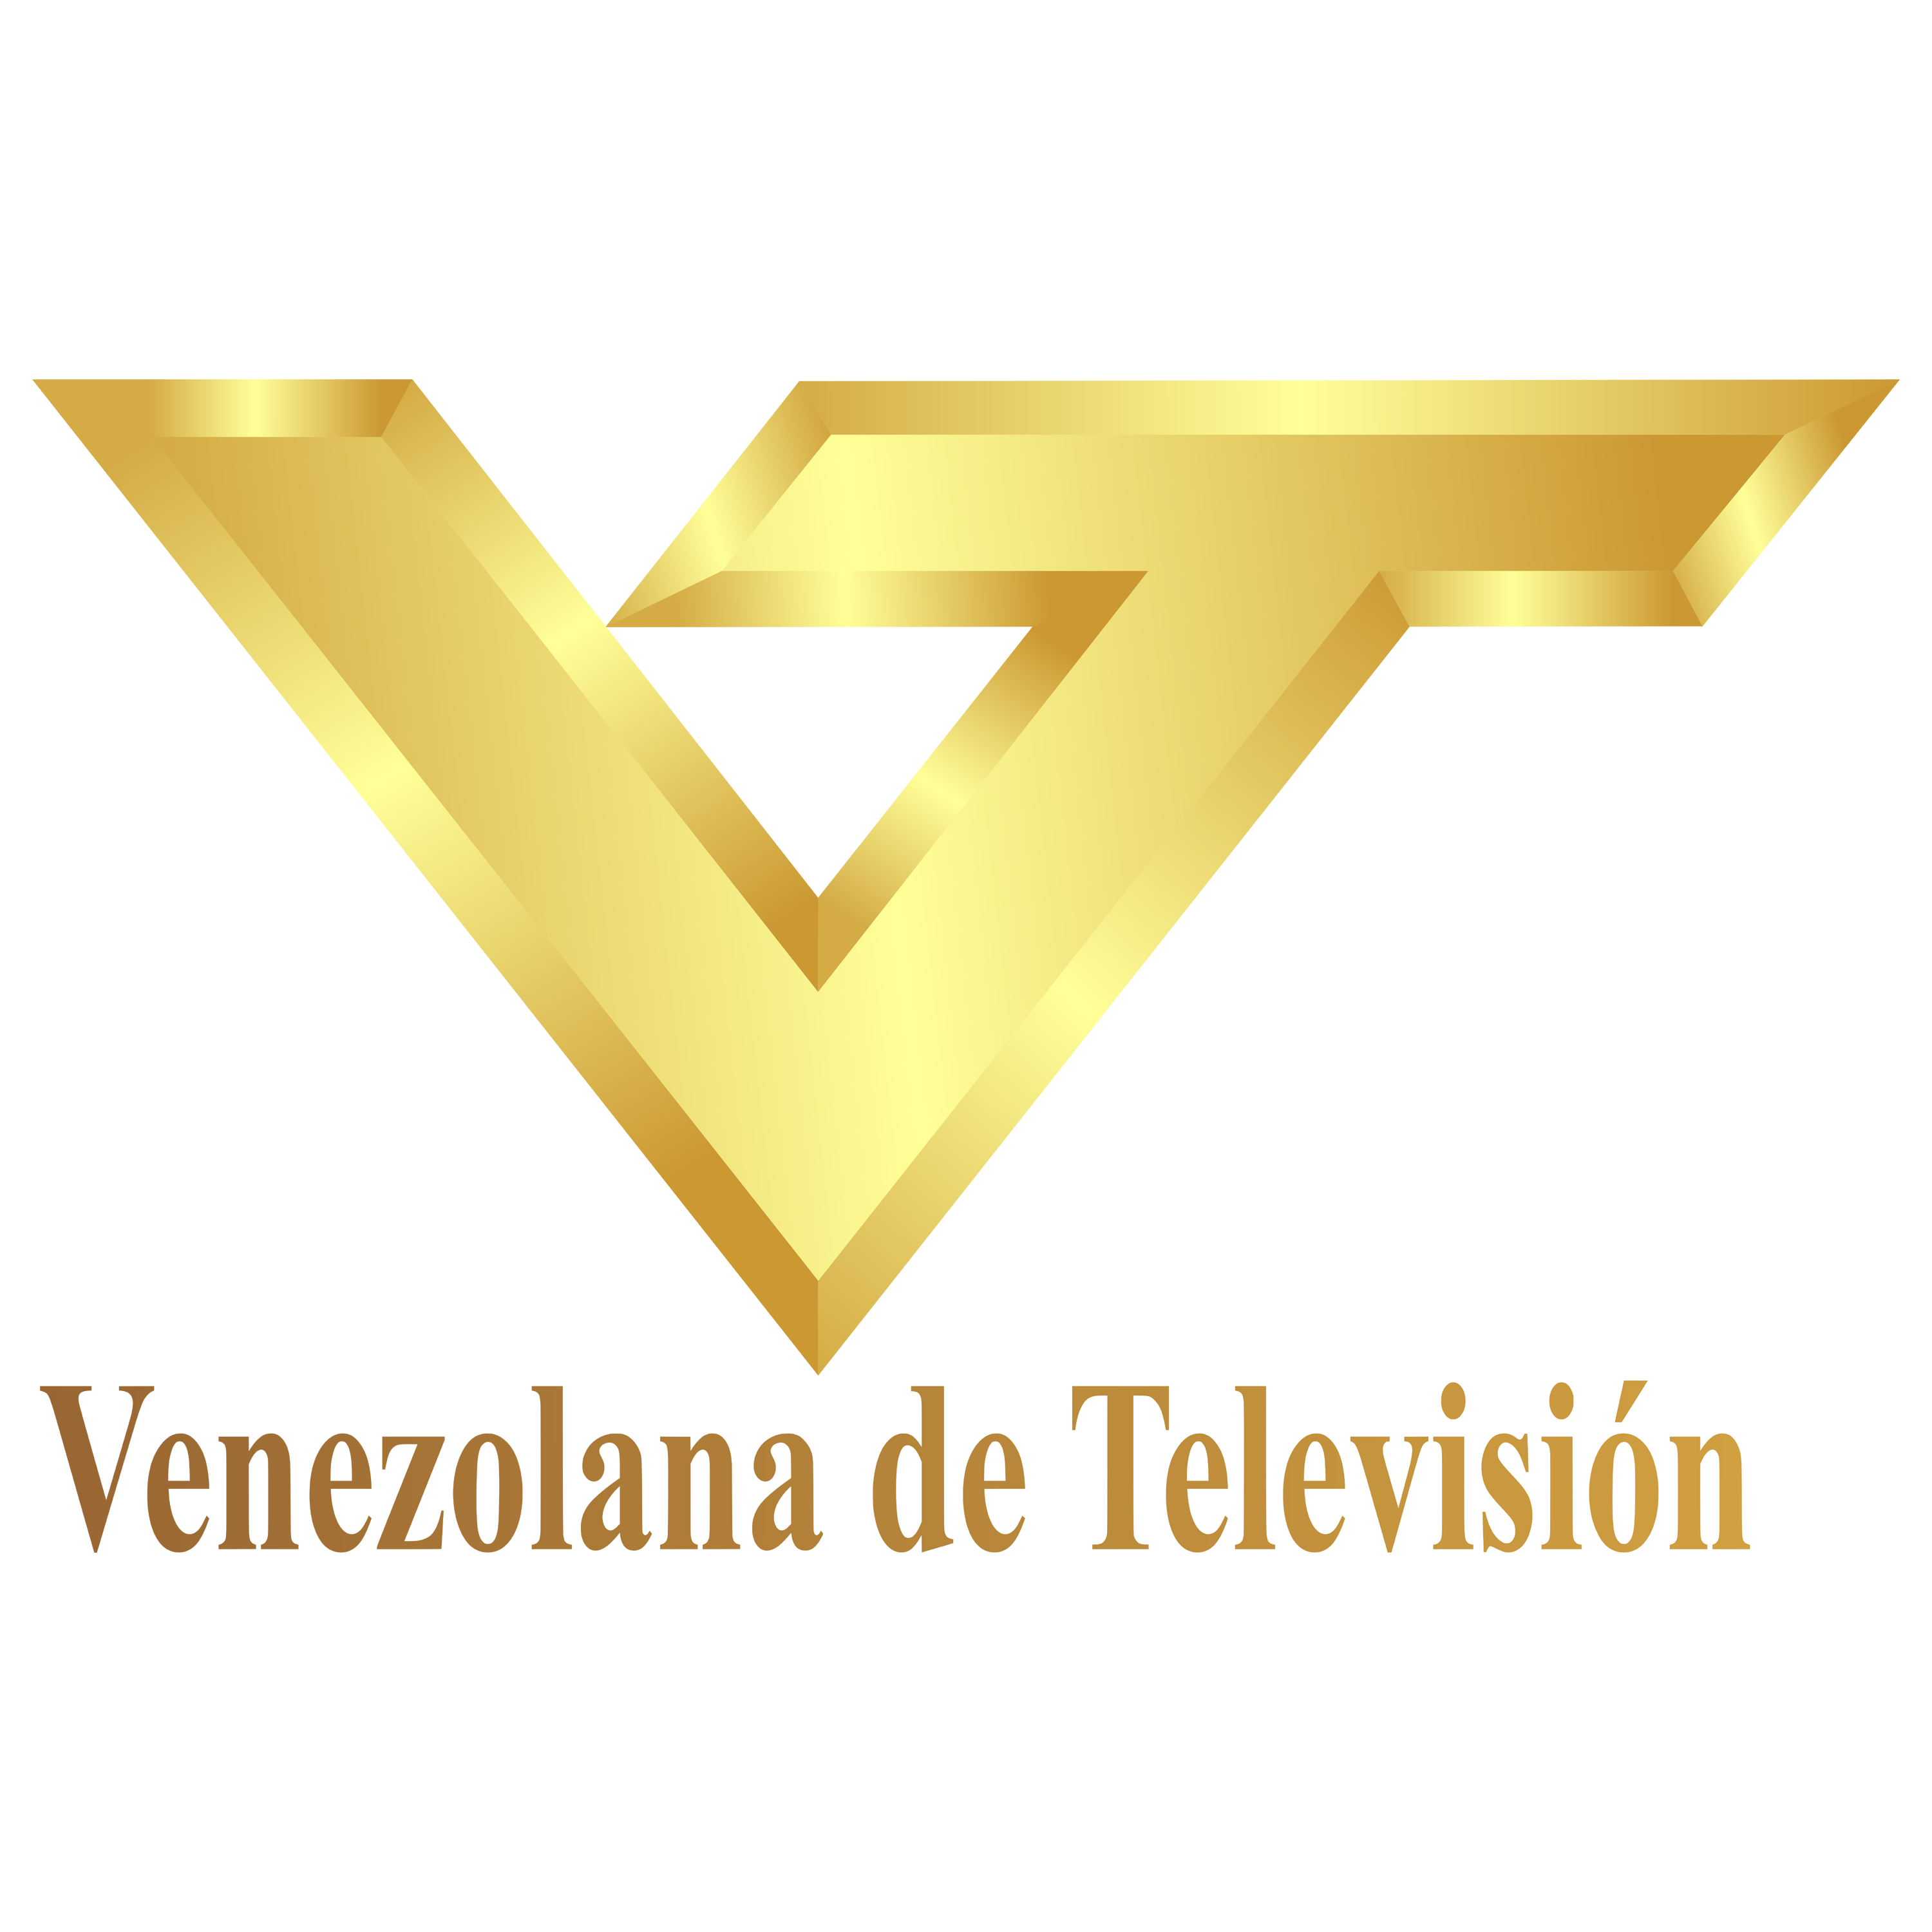 Venezolana De Television 1996 1998 Logo Transparent Image